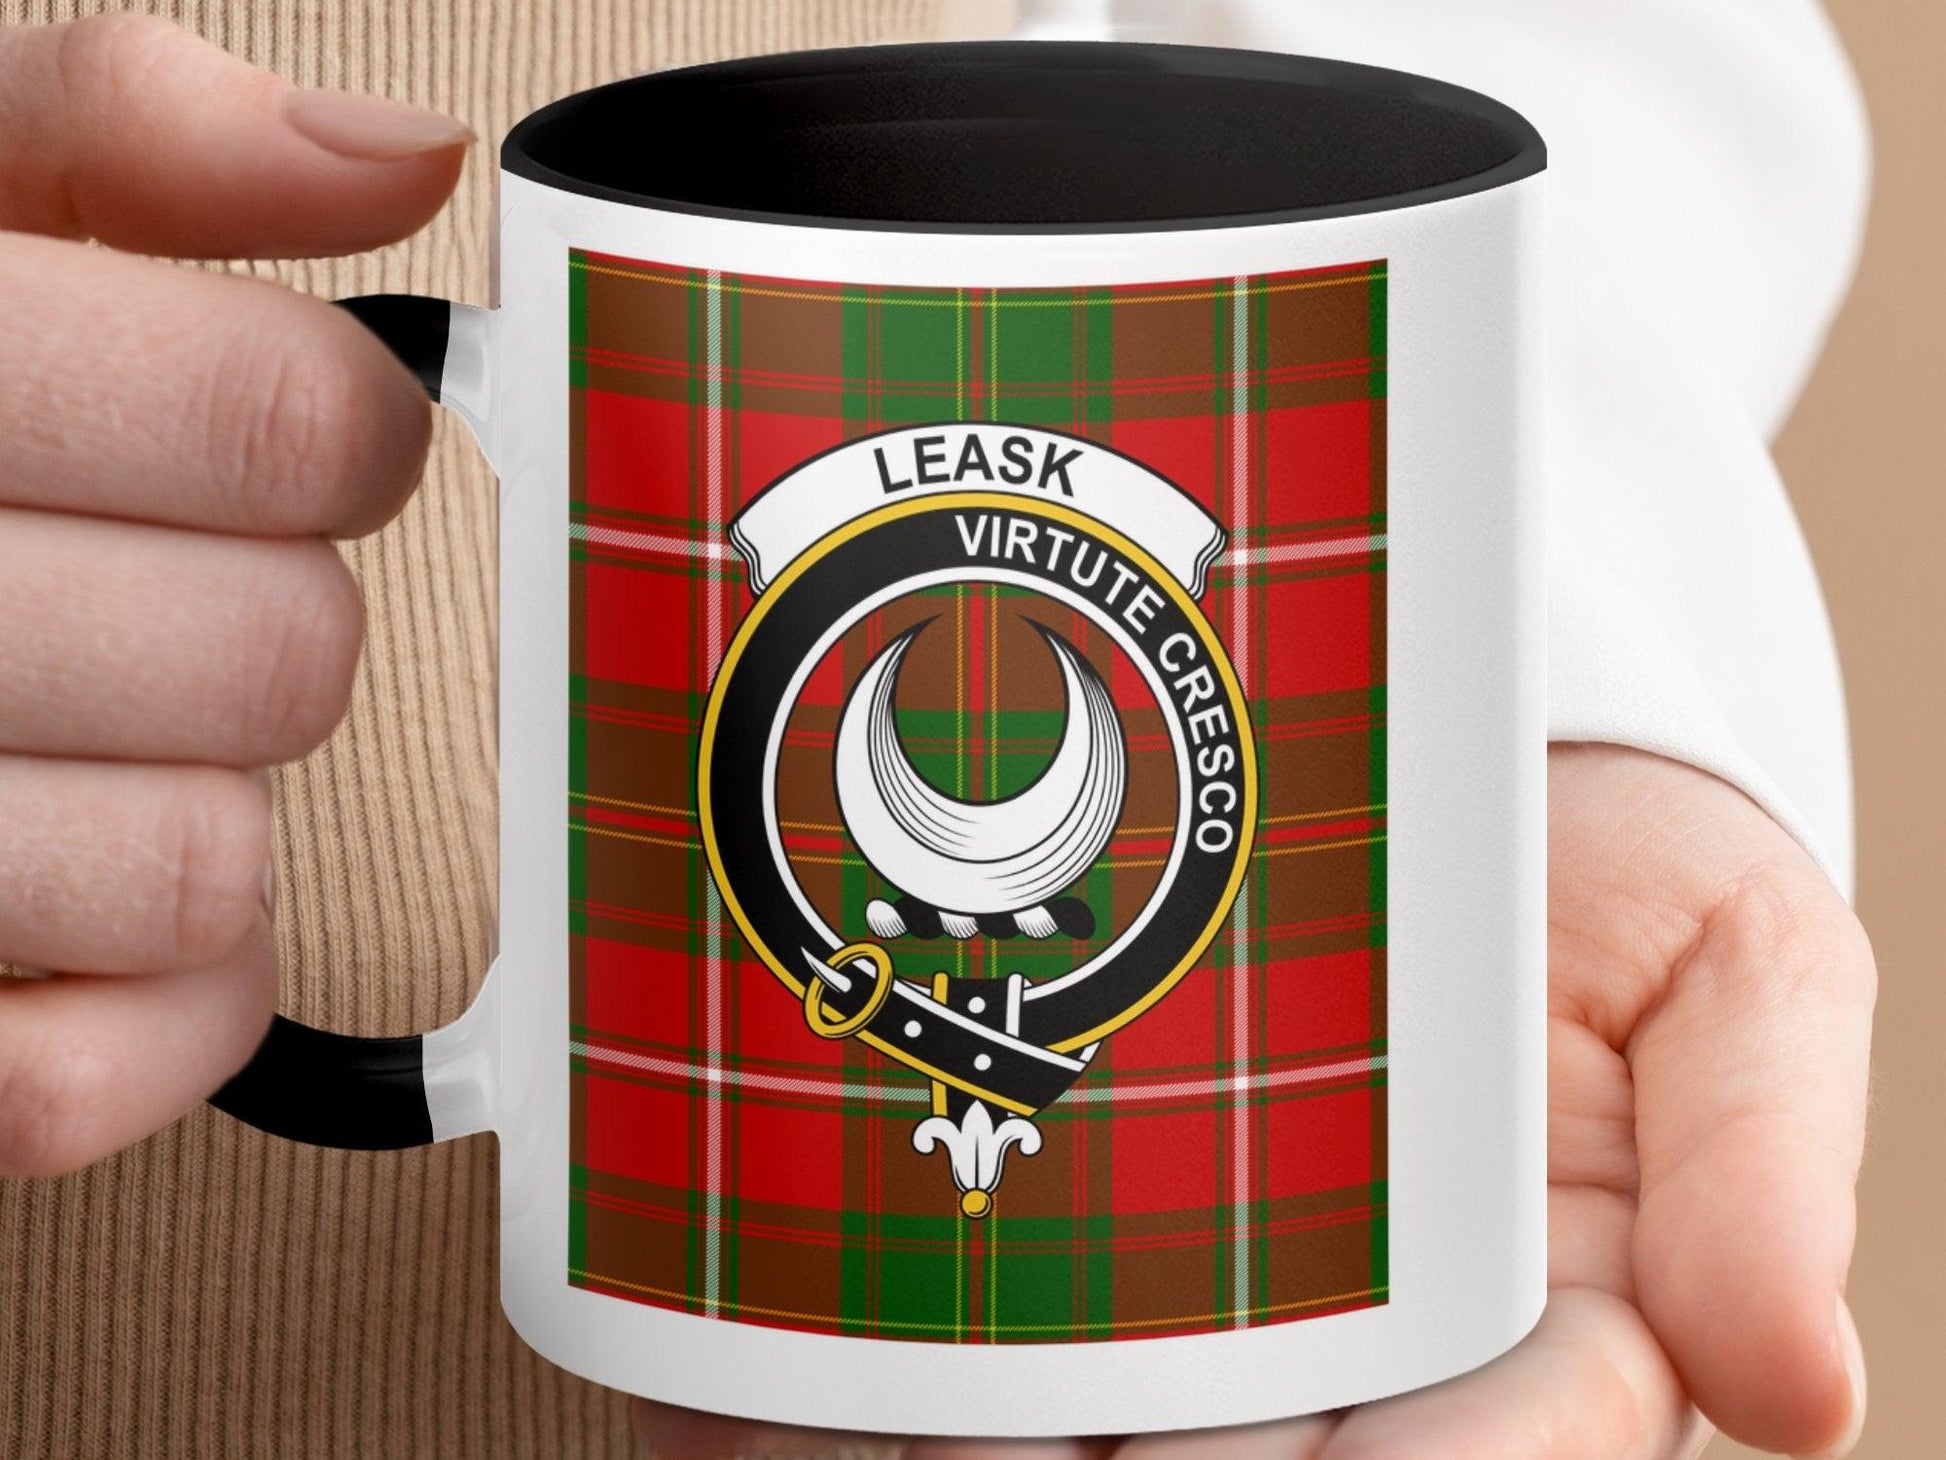 Clan Leask Virtute Cresco Tartan Crest Plaid Mug - Living Stone Gifts